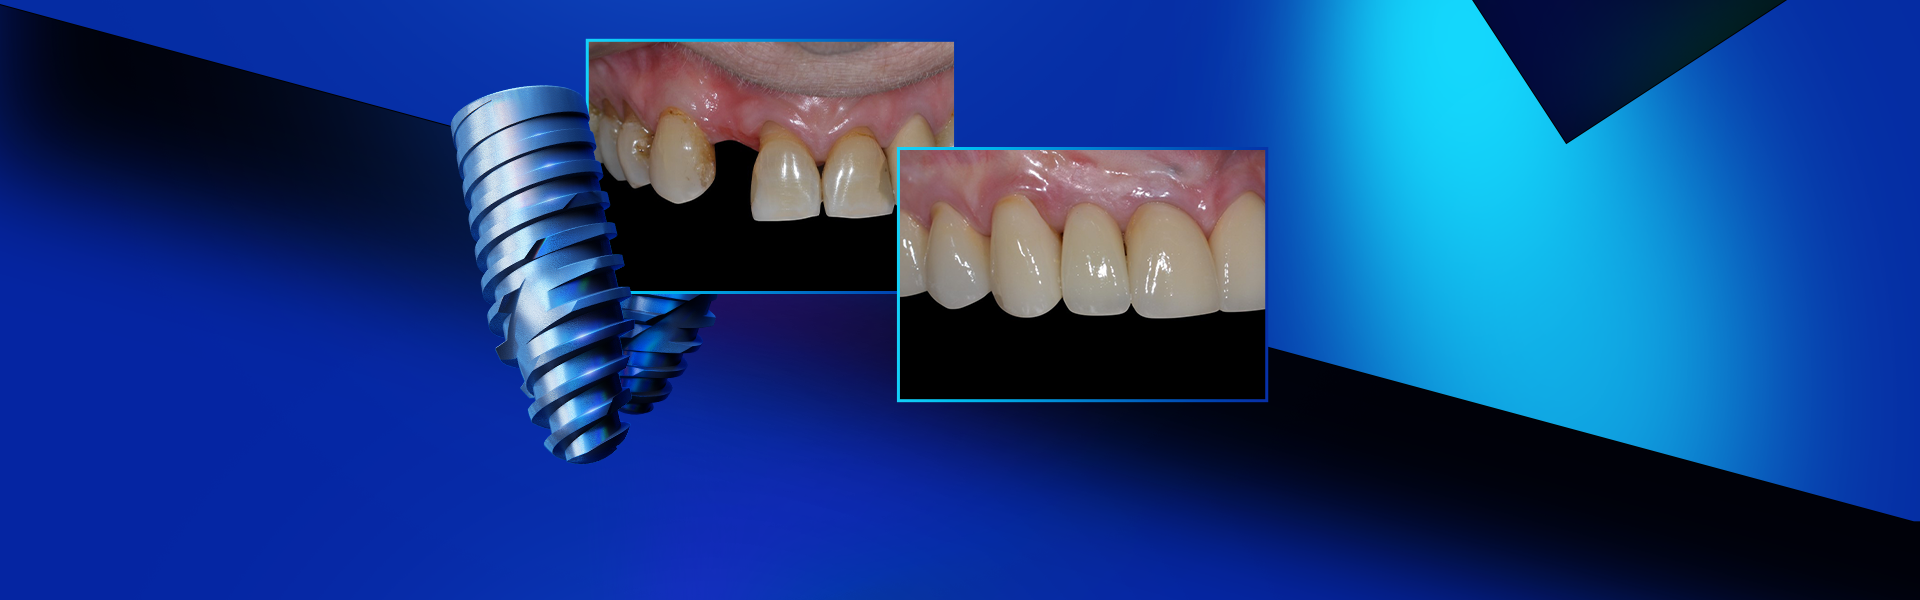 77475 Reabilitacao Dento Alveolar Com Implante Arcsys - Rehabilitación dentoalveolar con implante Arcsys, injerto conjuntivo y sustituto óseo Nanosynt